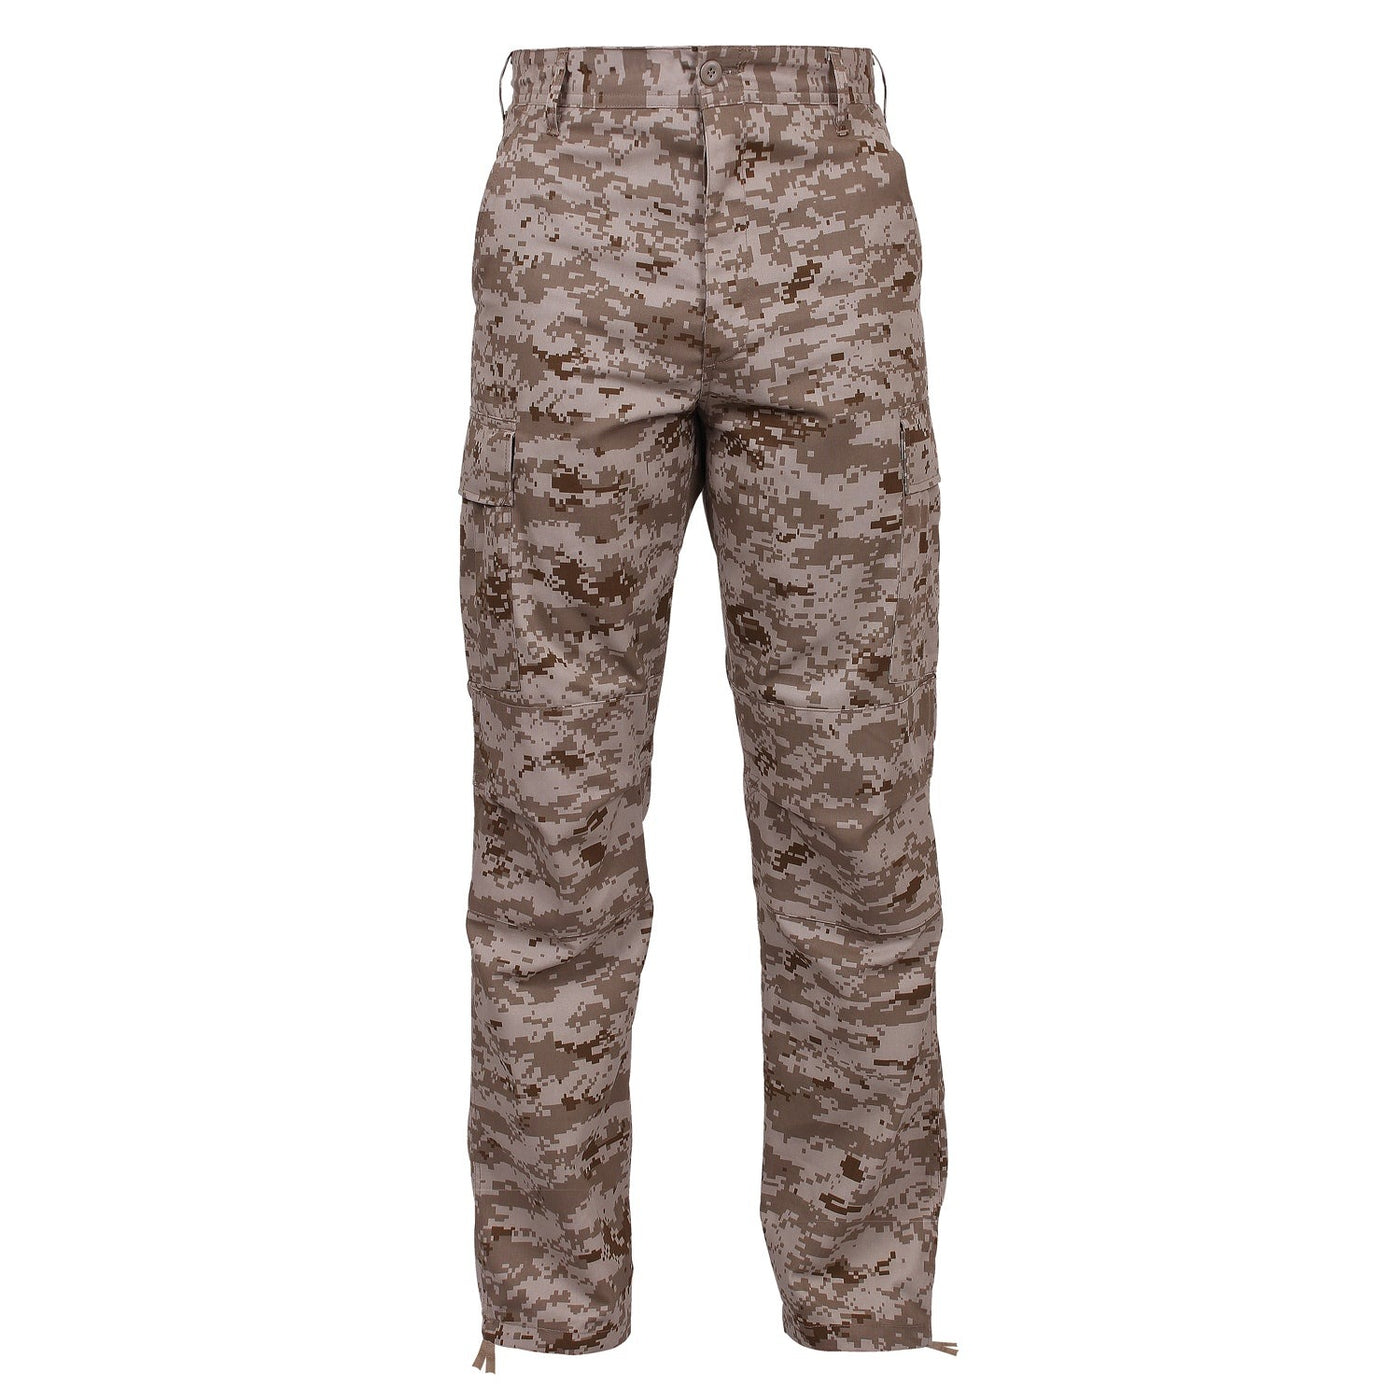 Rothco Camo Tactical BDU Pants (Color: ACU / Large), Tactical Gear